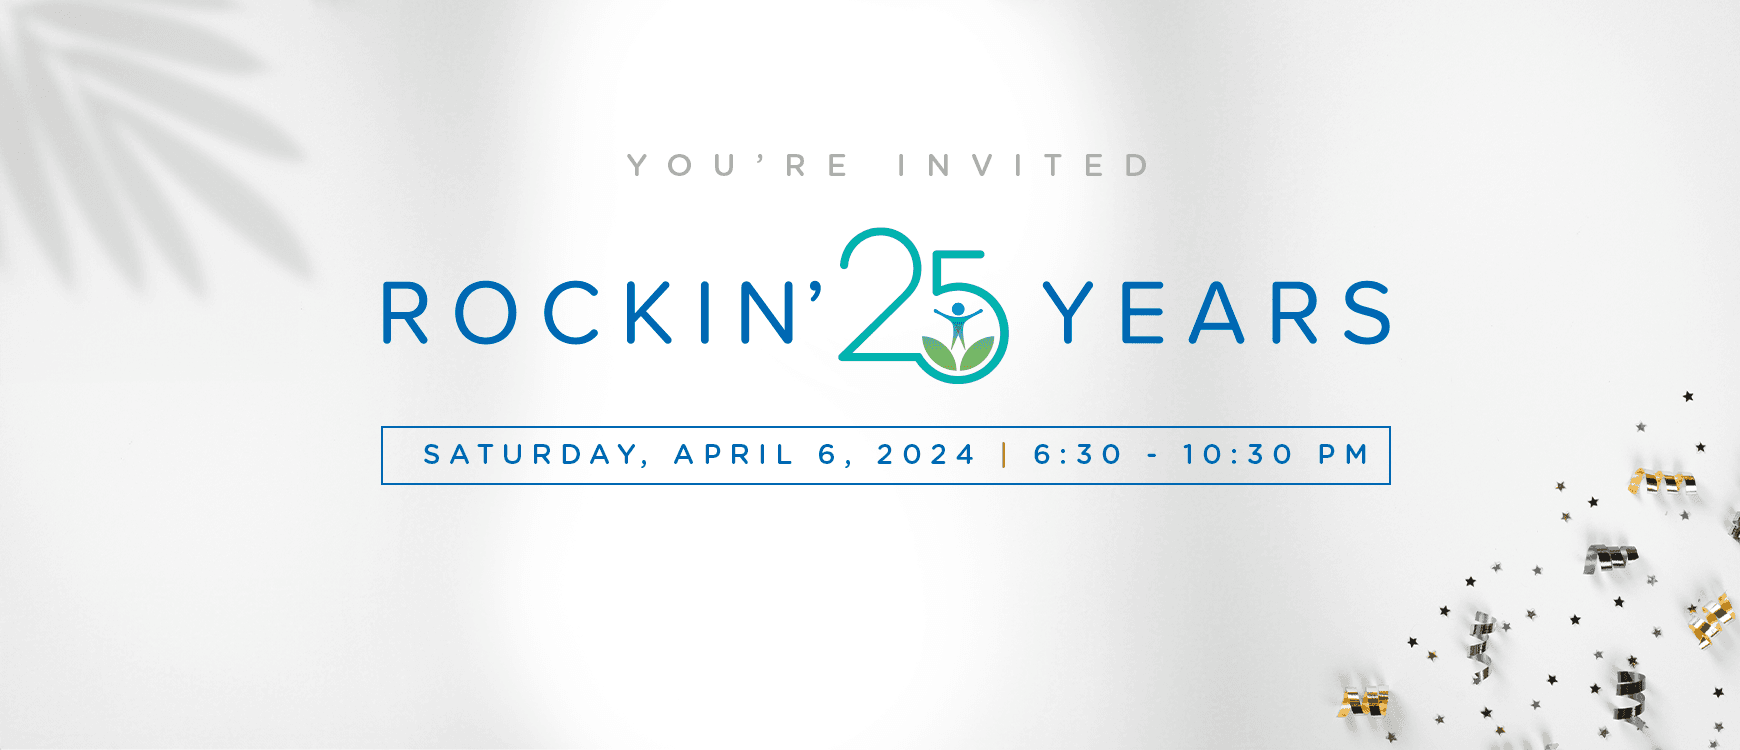 CBC is Rockin' 25 Years!